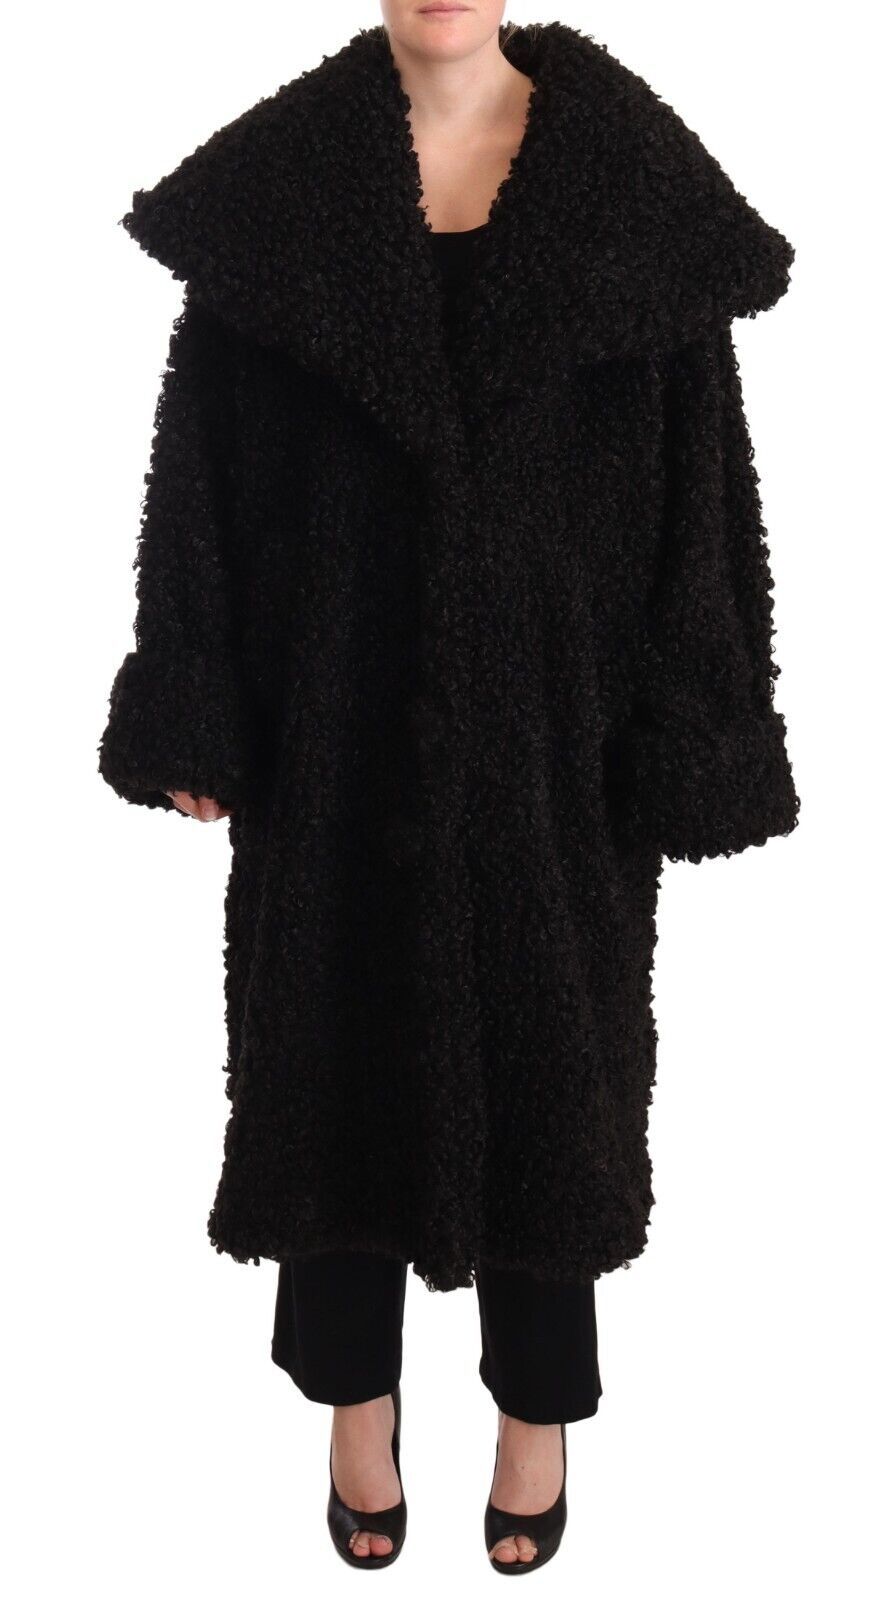 Black Polyester Fur Trench Coat Jacket